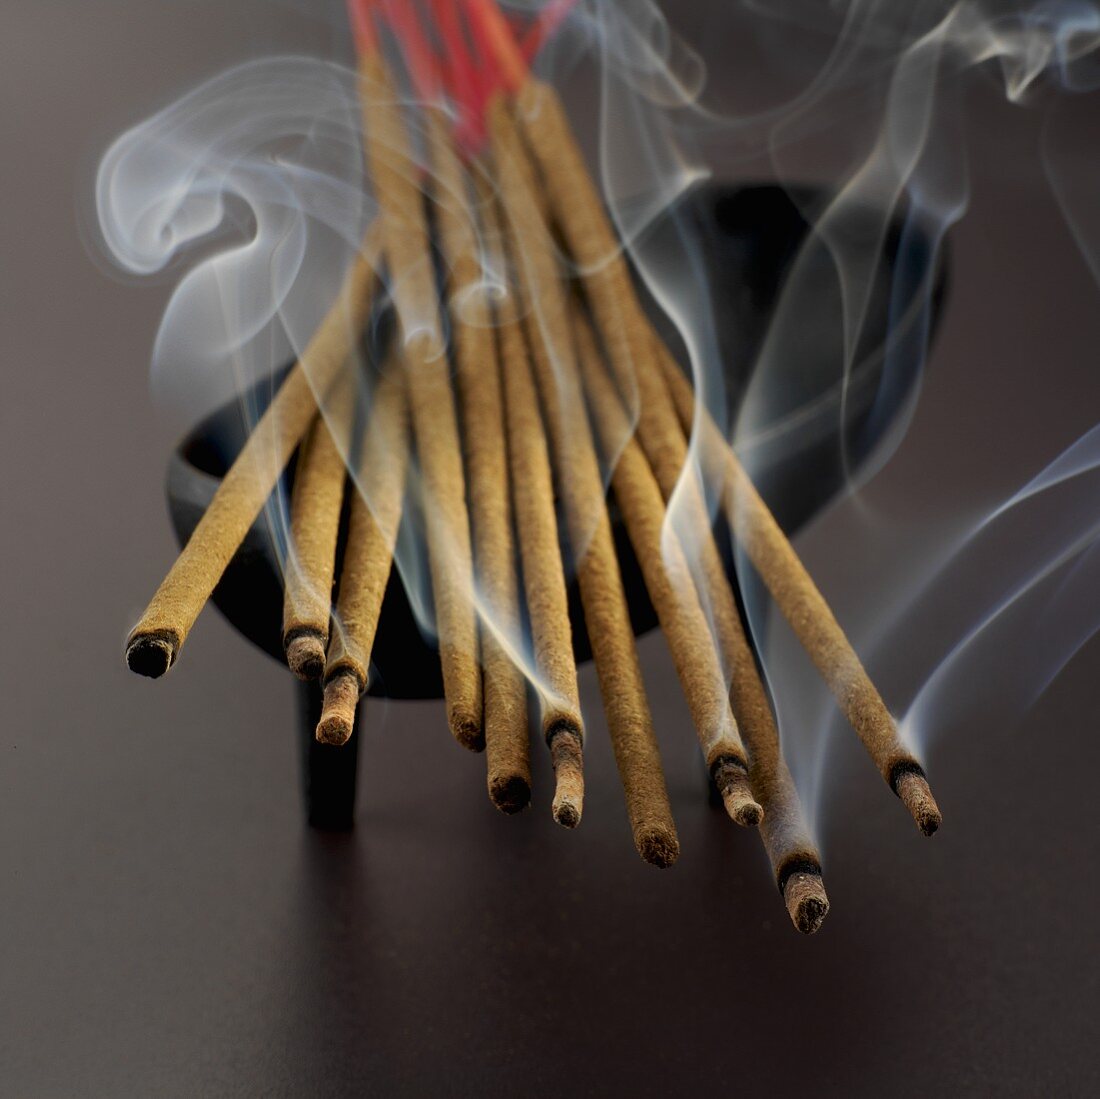 Incense sticks in dish